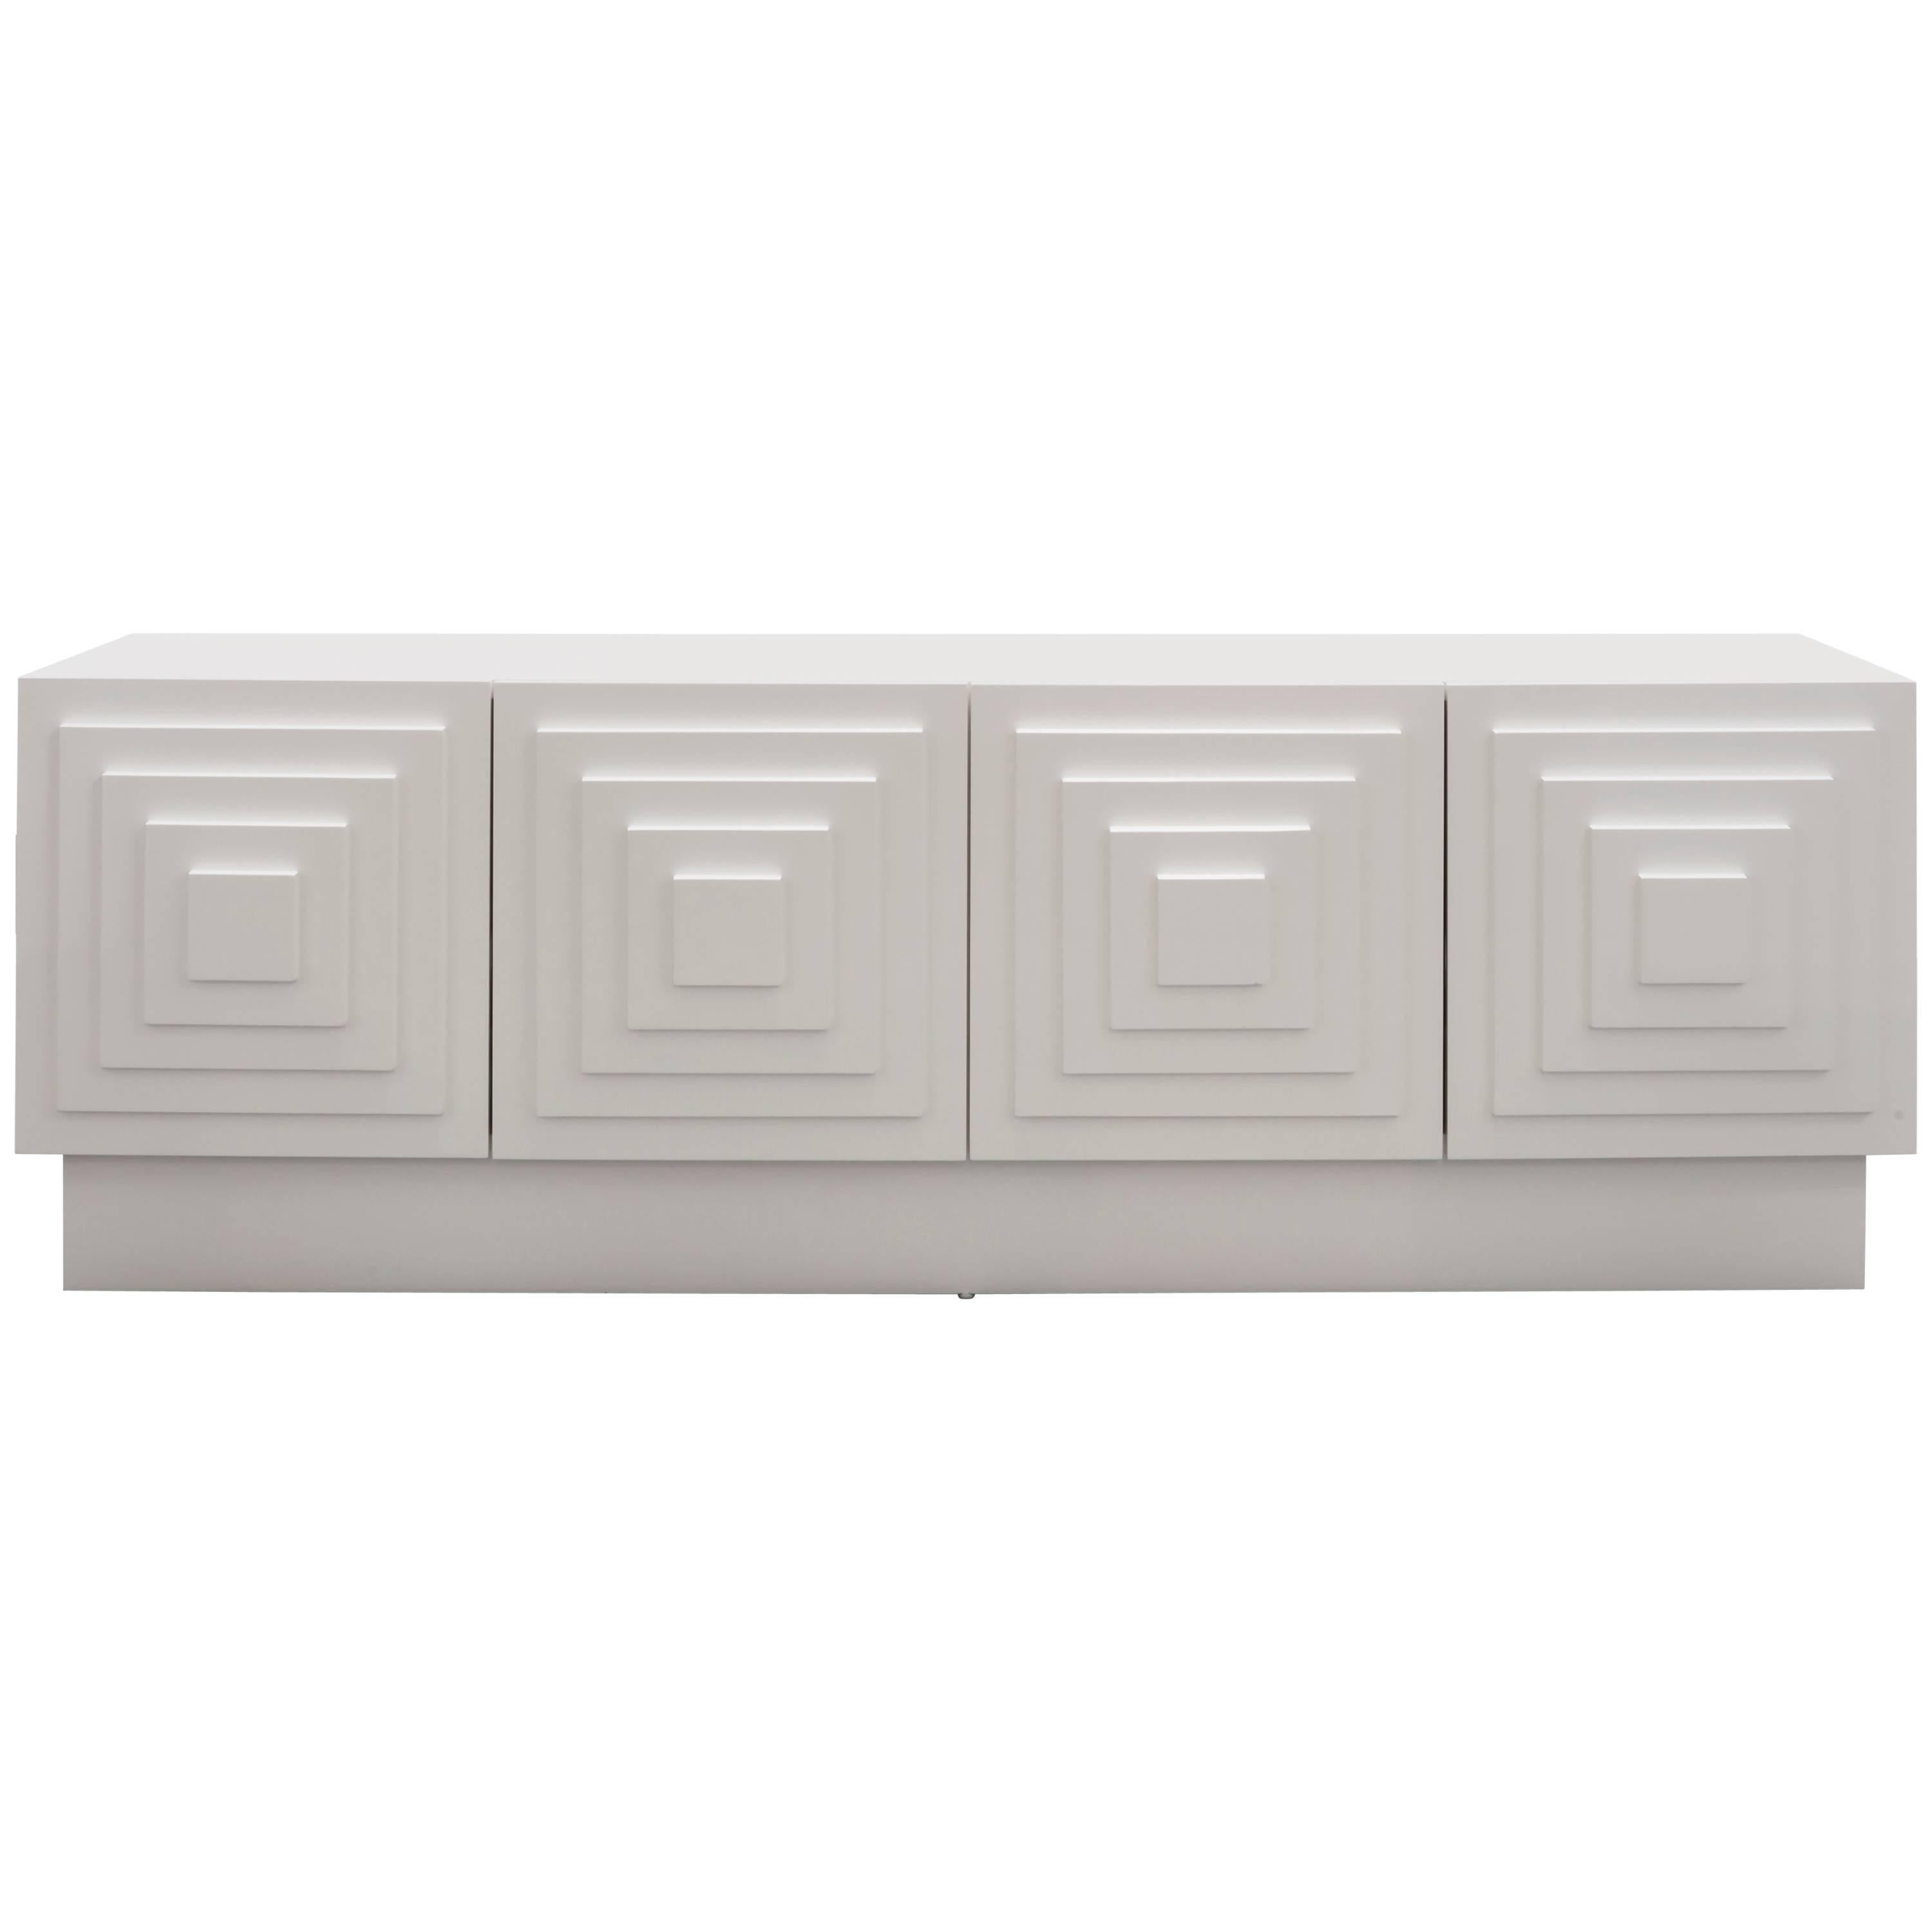 GAULTIER MEDIA CREDENZA - Cabinet géométrique moderne en laque blanche